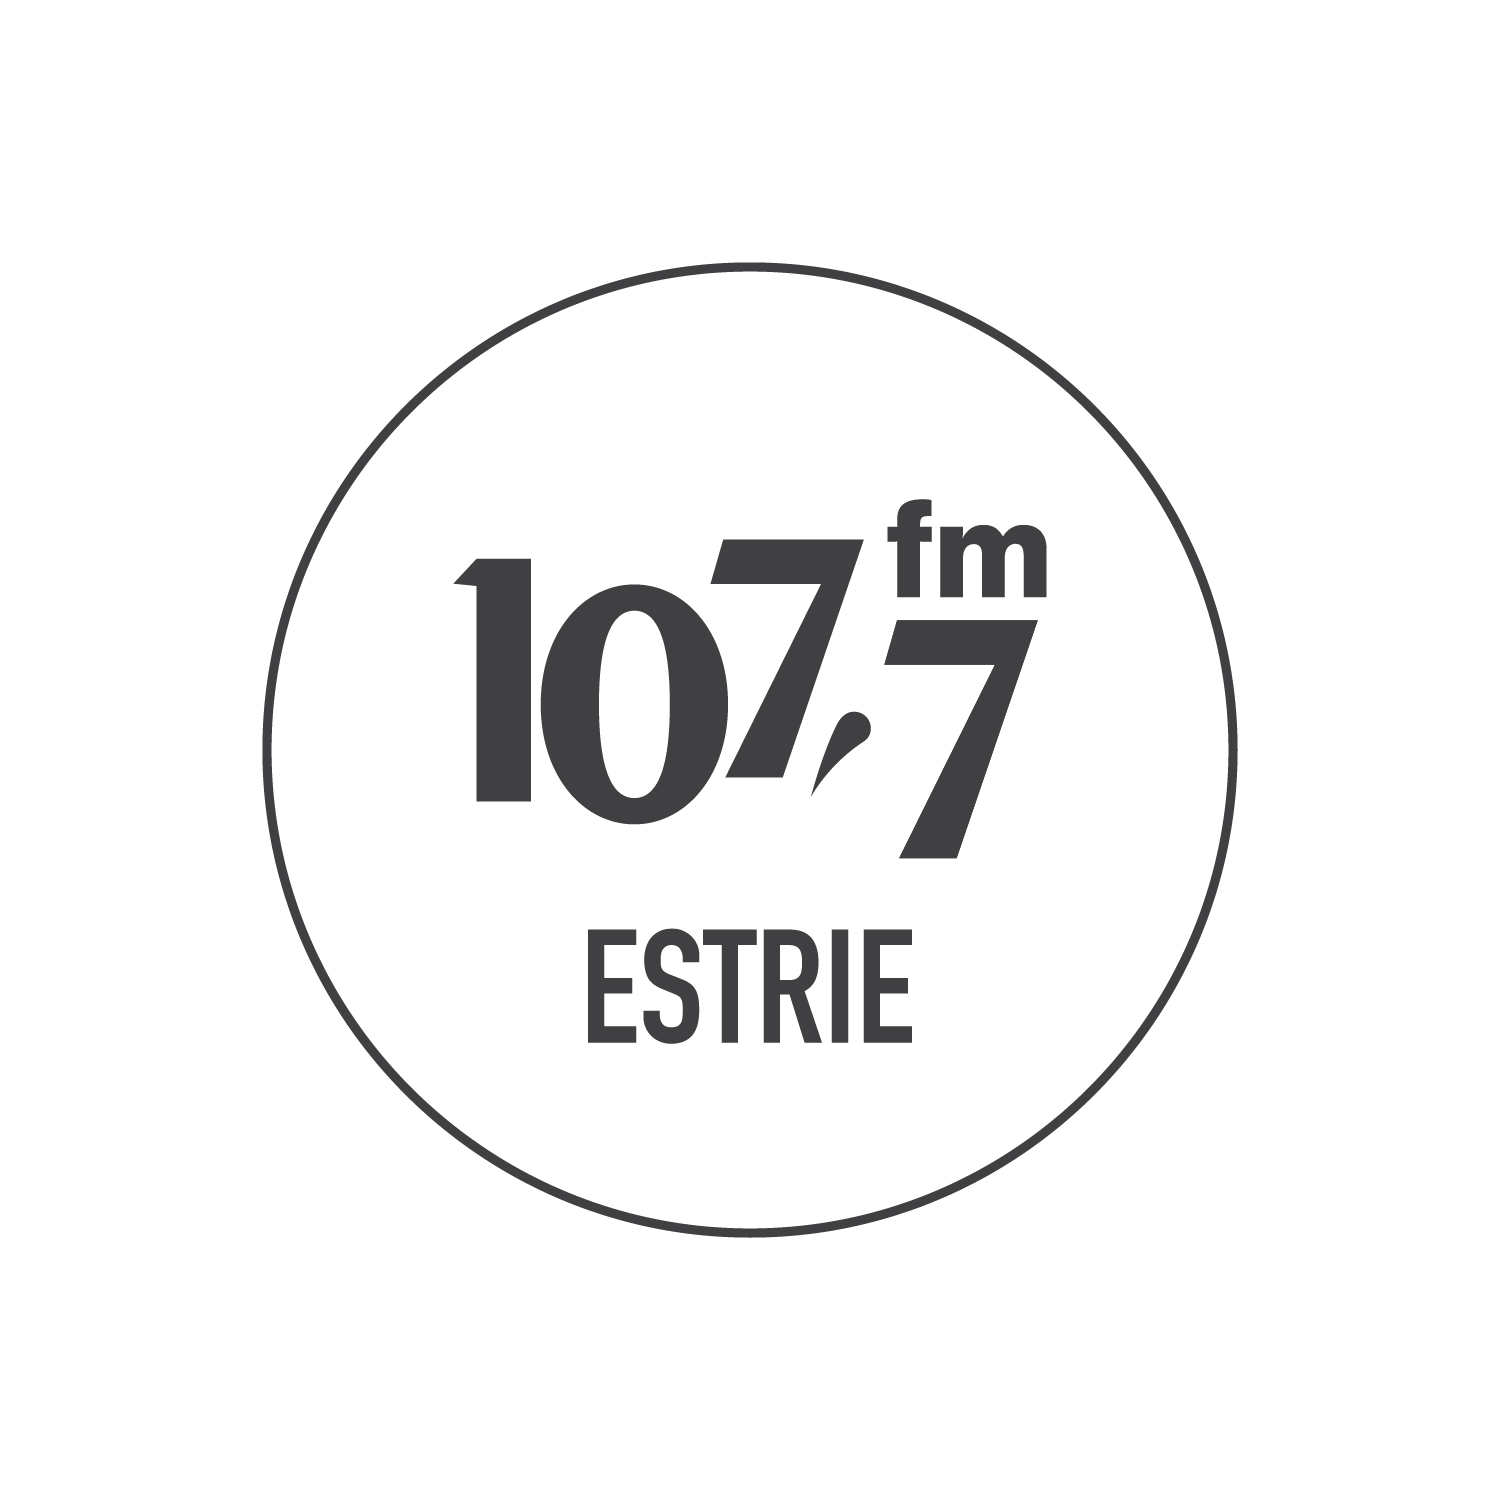 1077_logo_avec_estrie_NOIR